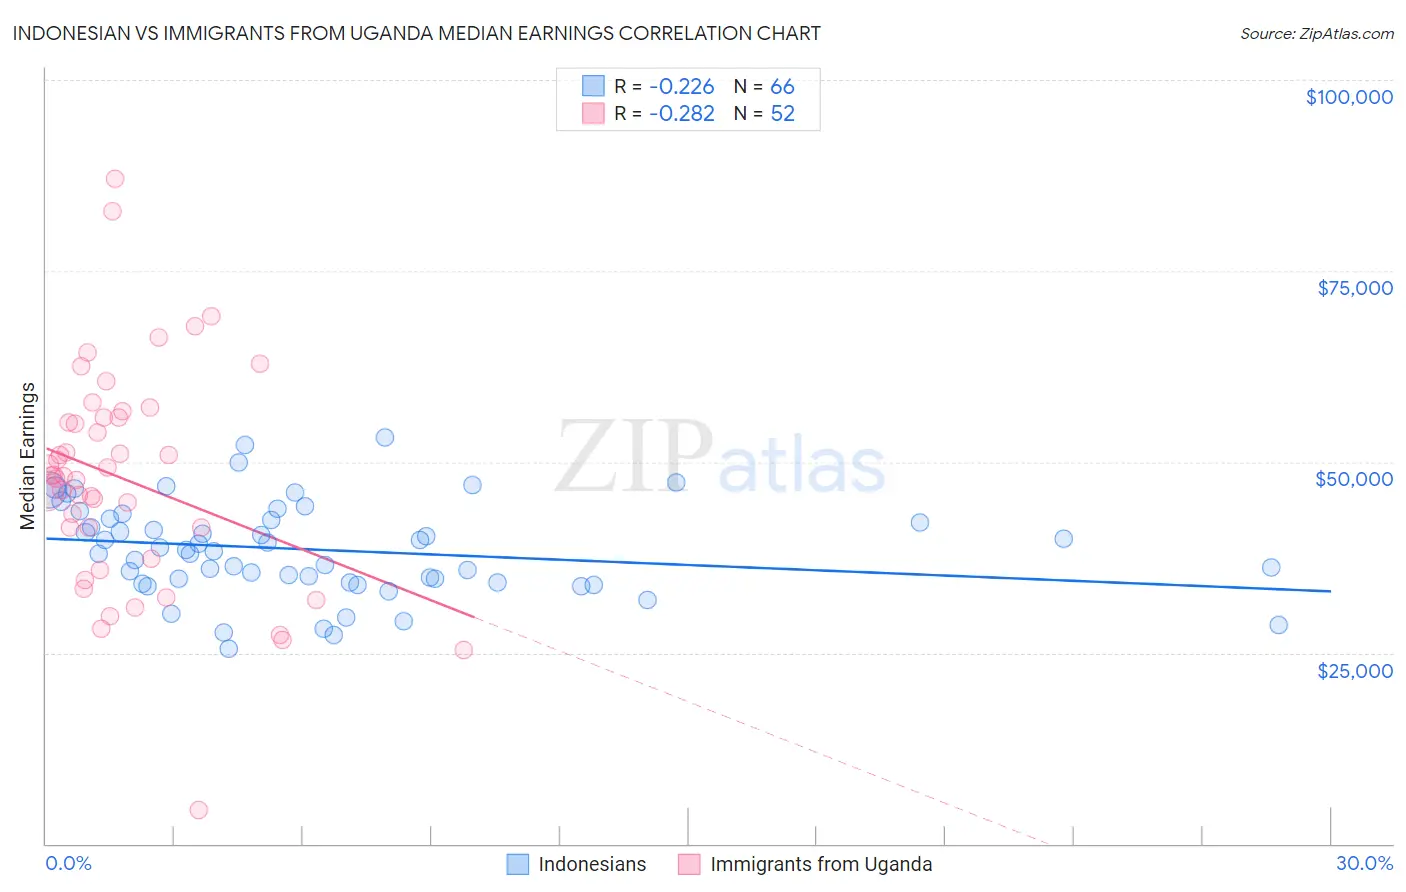 Indonesian vs Immigrants from Uganda Median Earnings